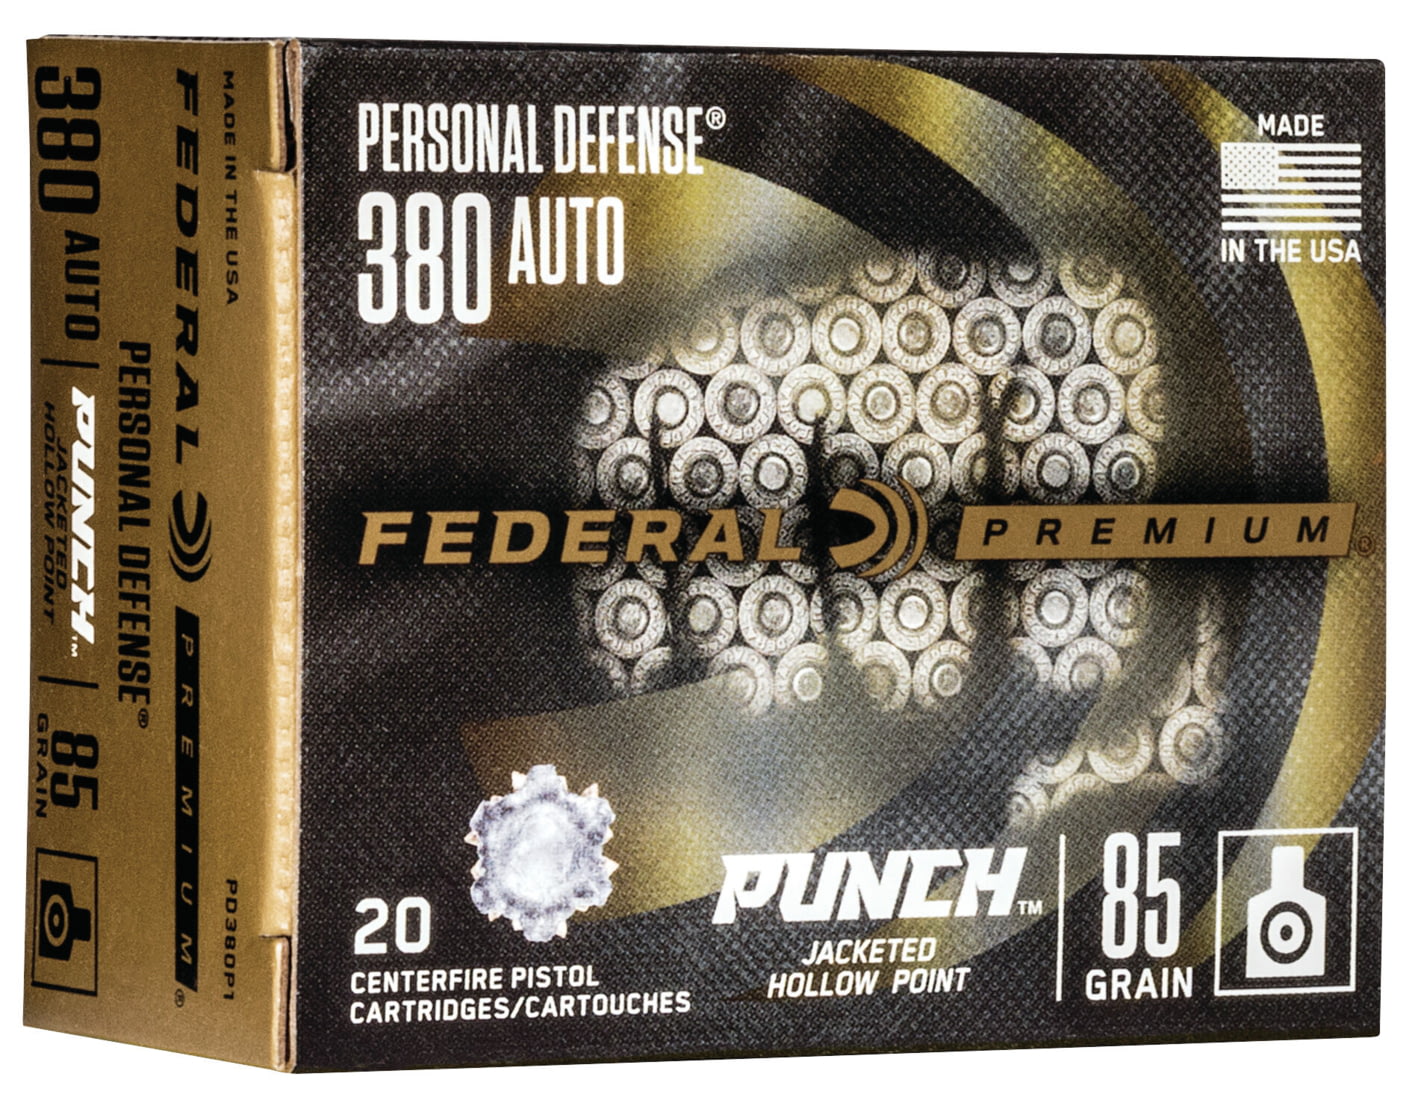 Federal Premium Centerfire Handgun Ammunition .380 ACP 85 grain Jacketed Hollow Point Centerfire Pistol Ammunition